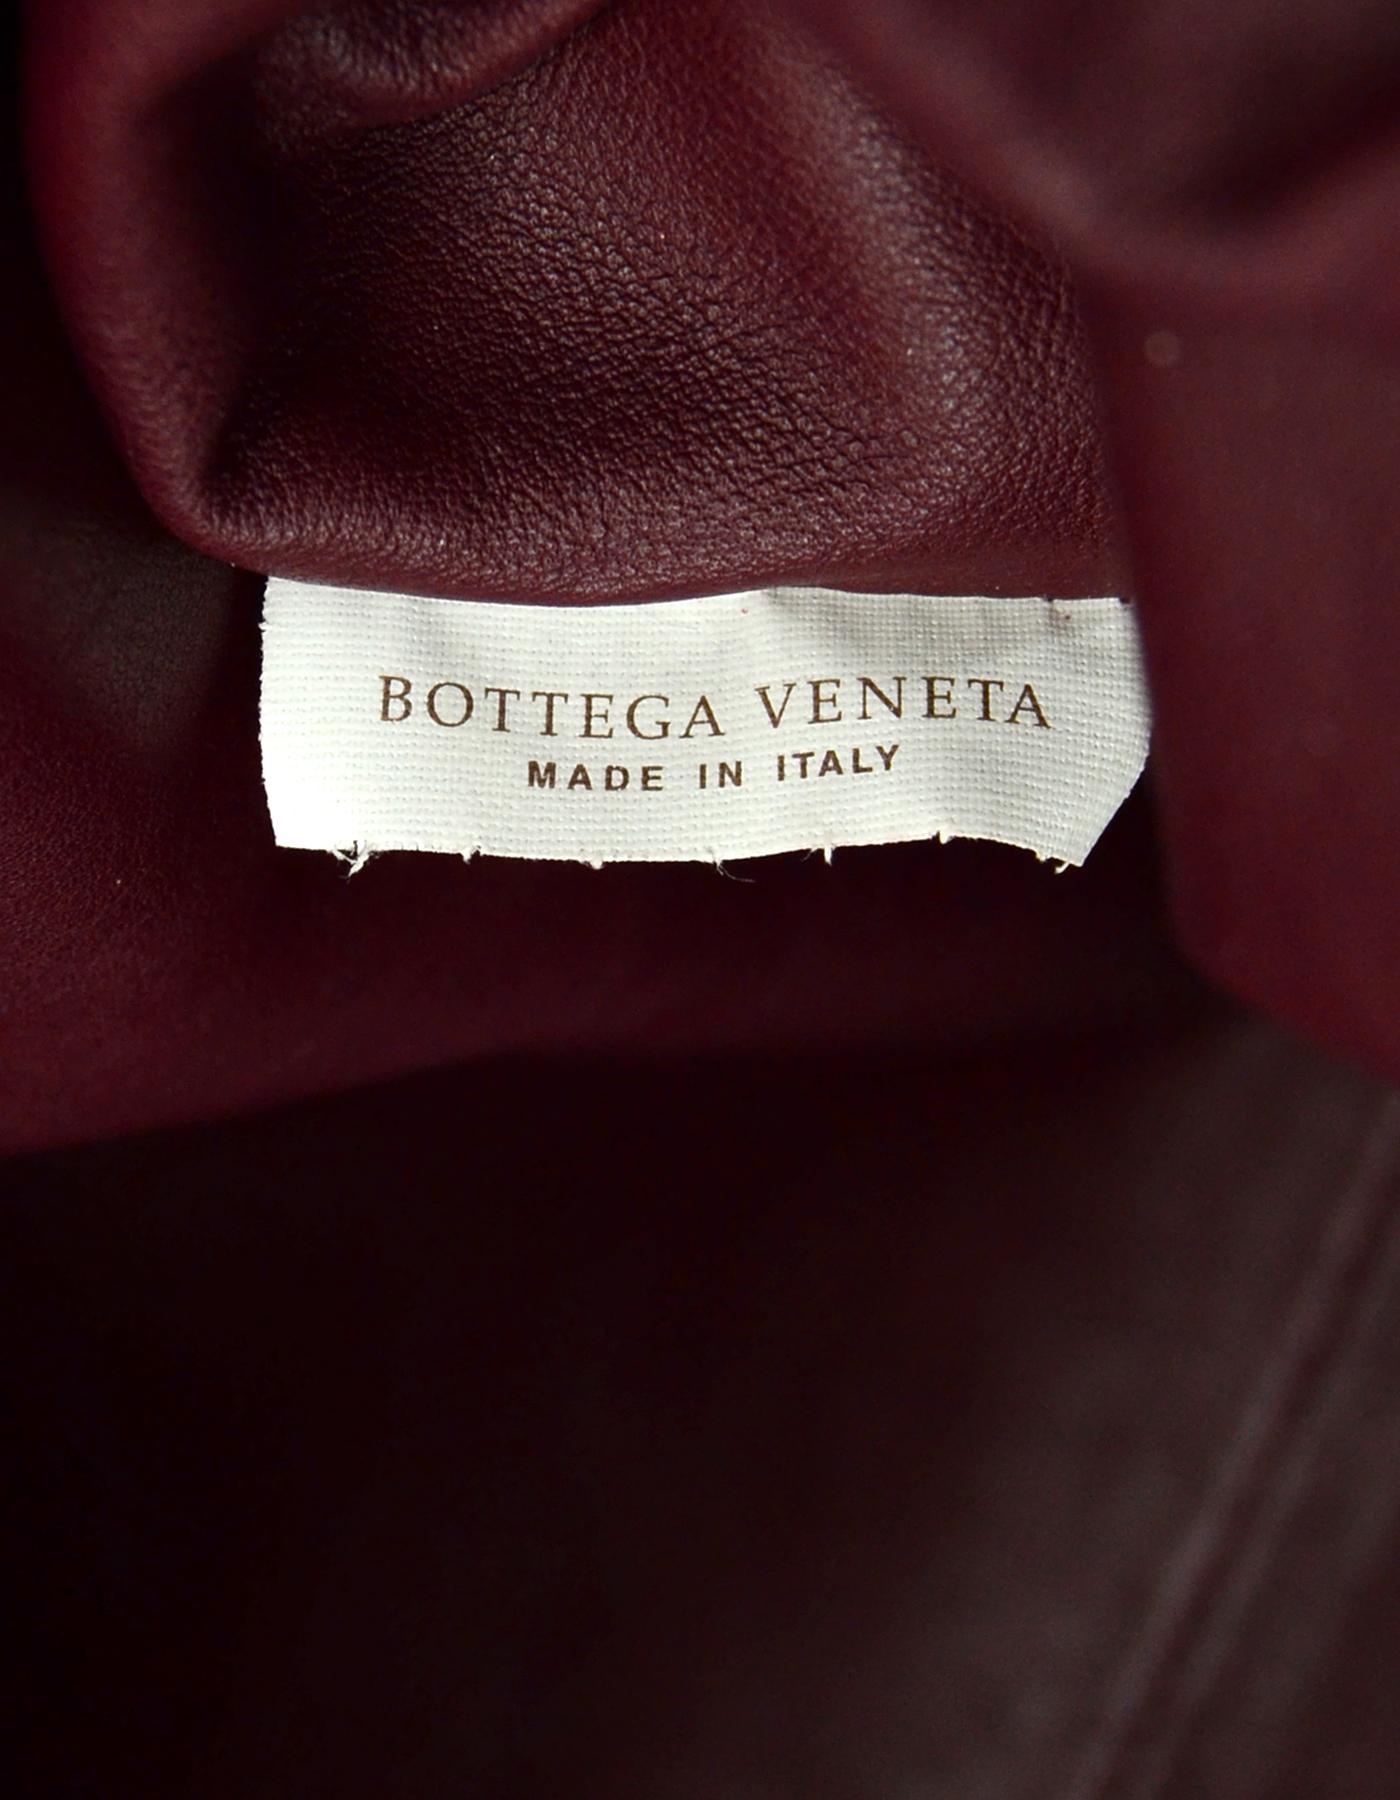 Bottega Veneta 2019 Burgundy Smooth Calfskin The Pouch Oversized Clutch Bag 2